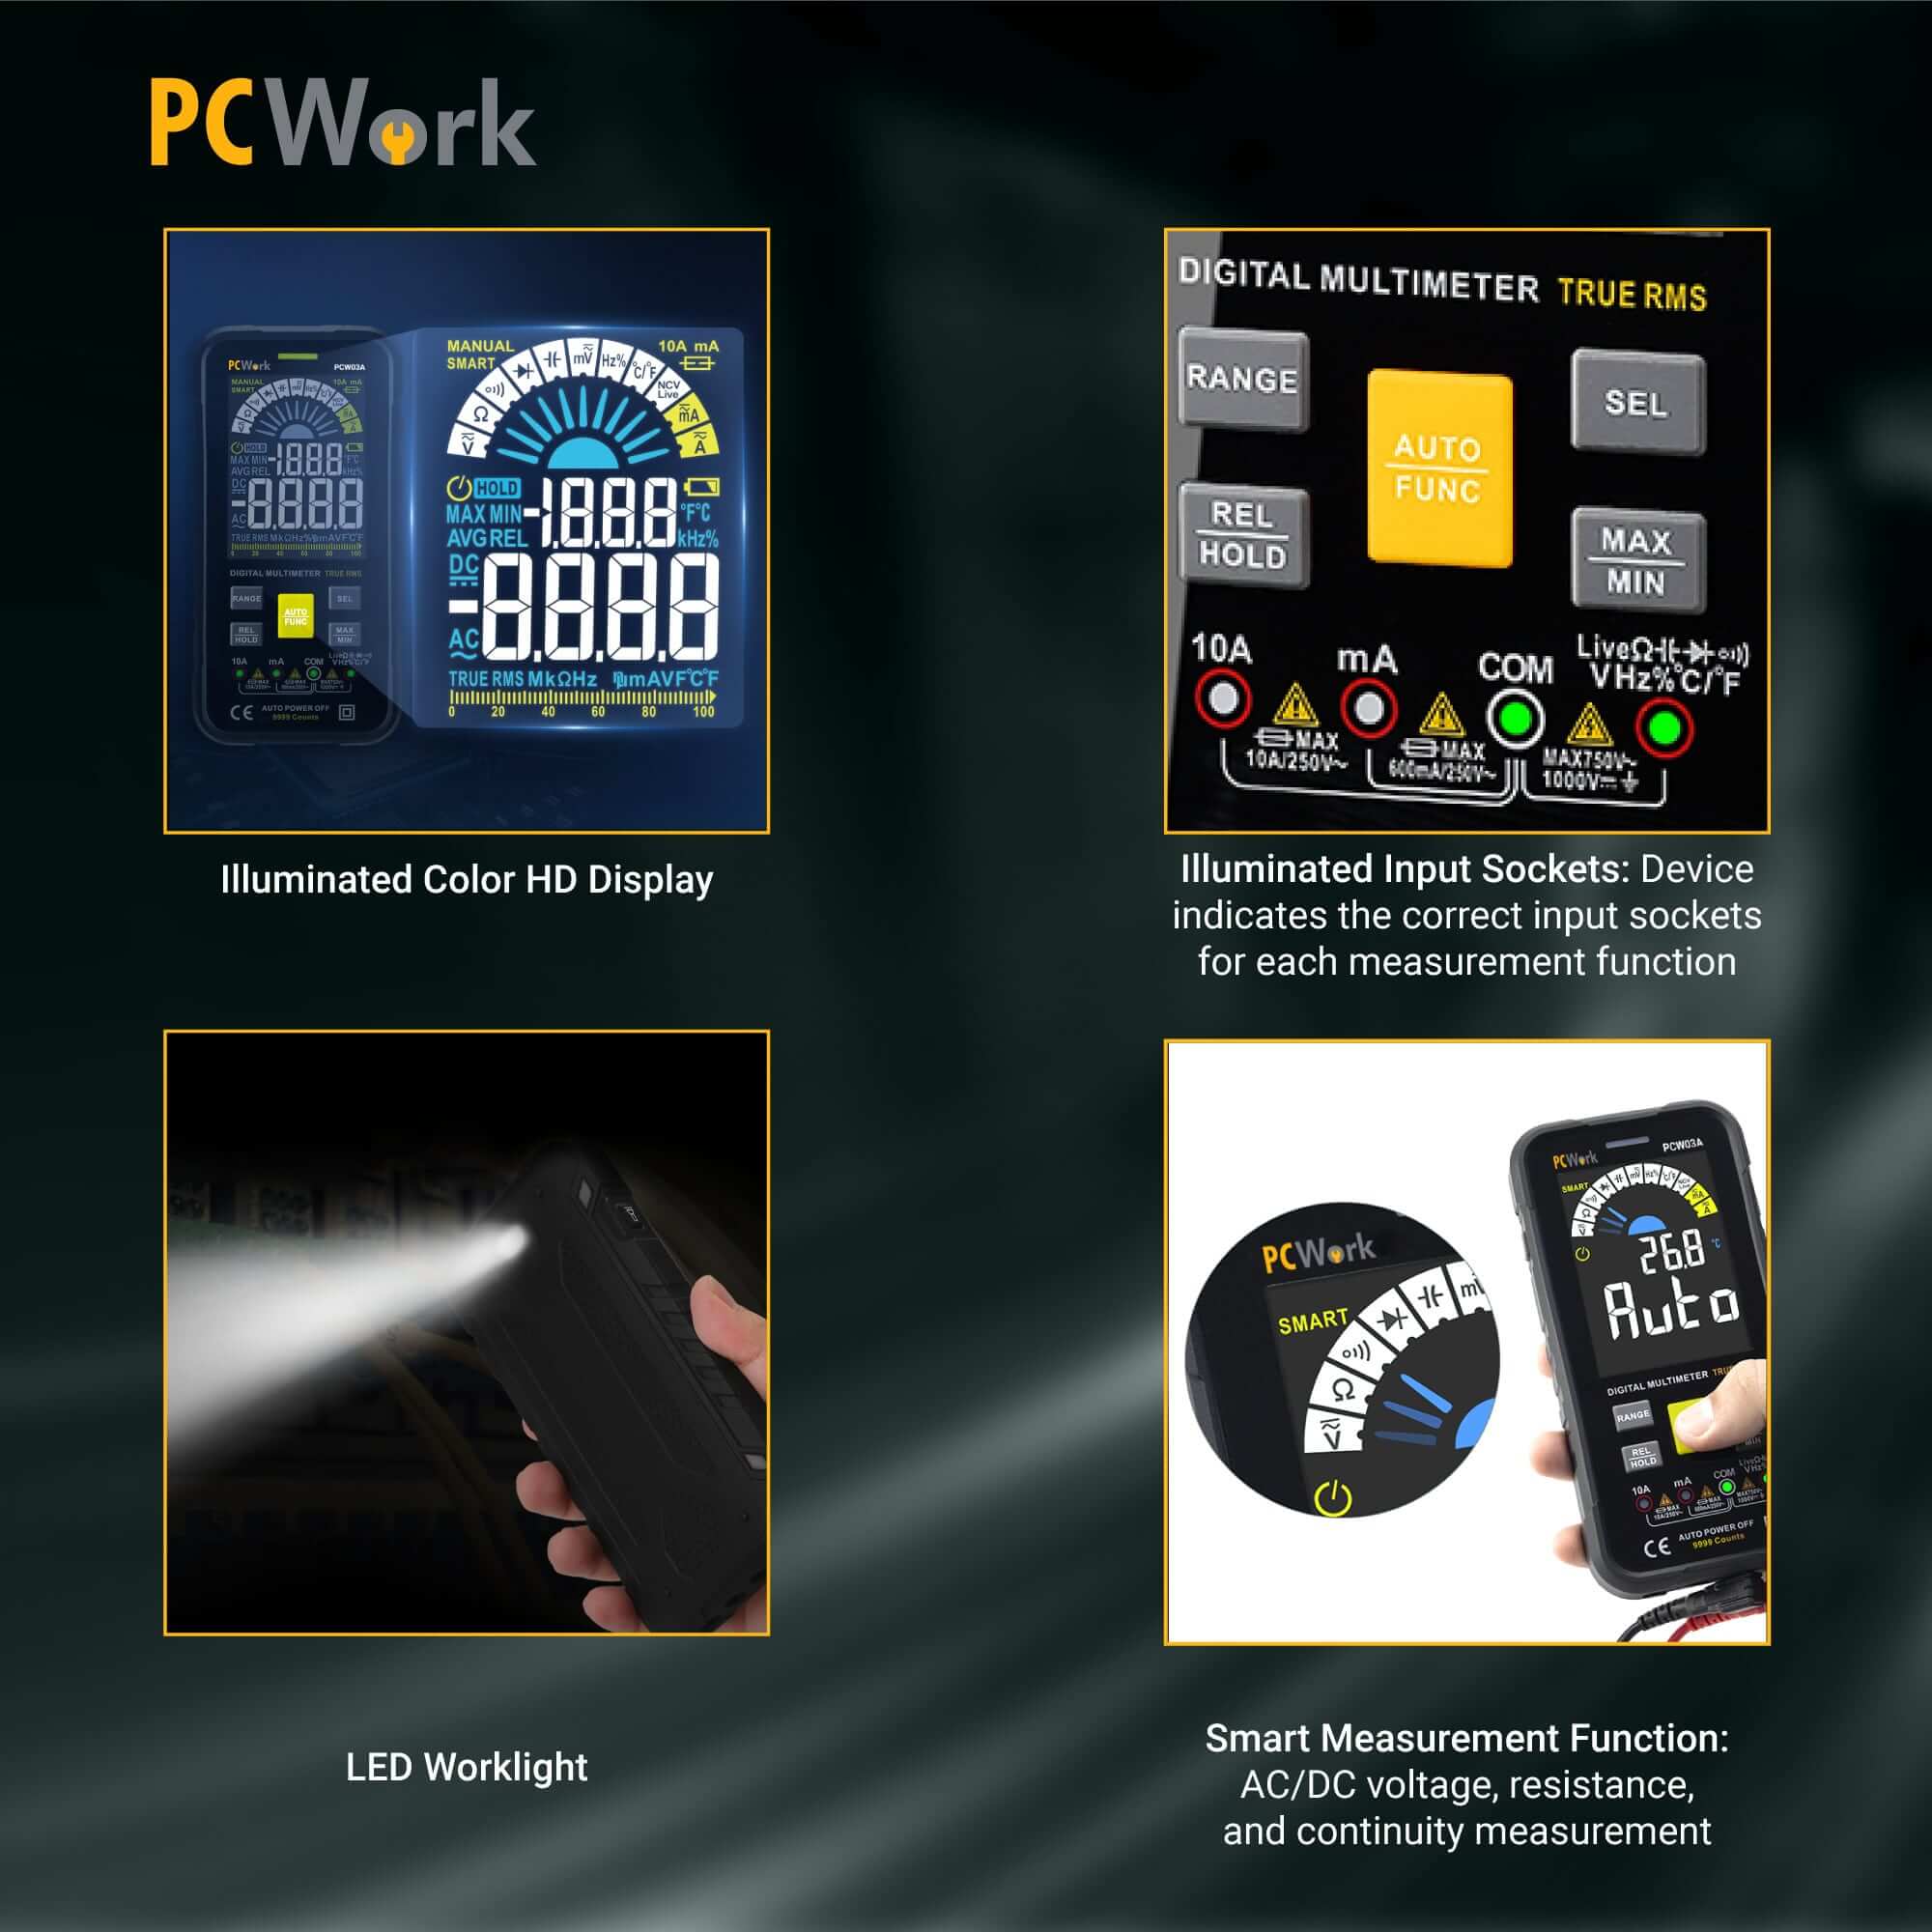 PCW03A Digitalmultimeter, smart, True RMS